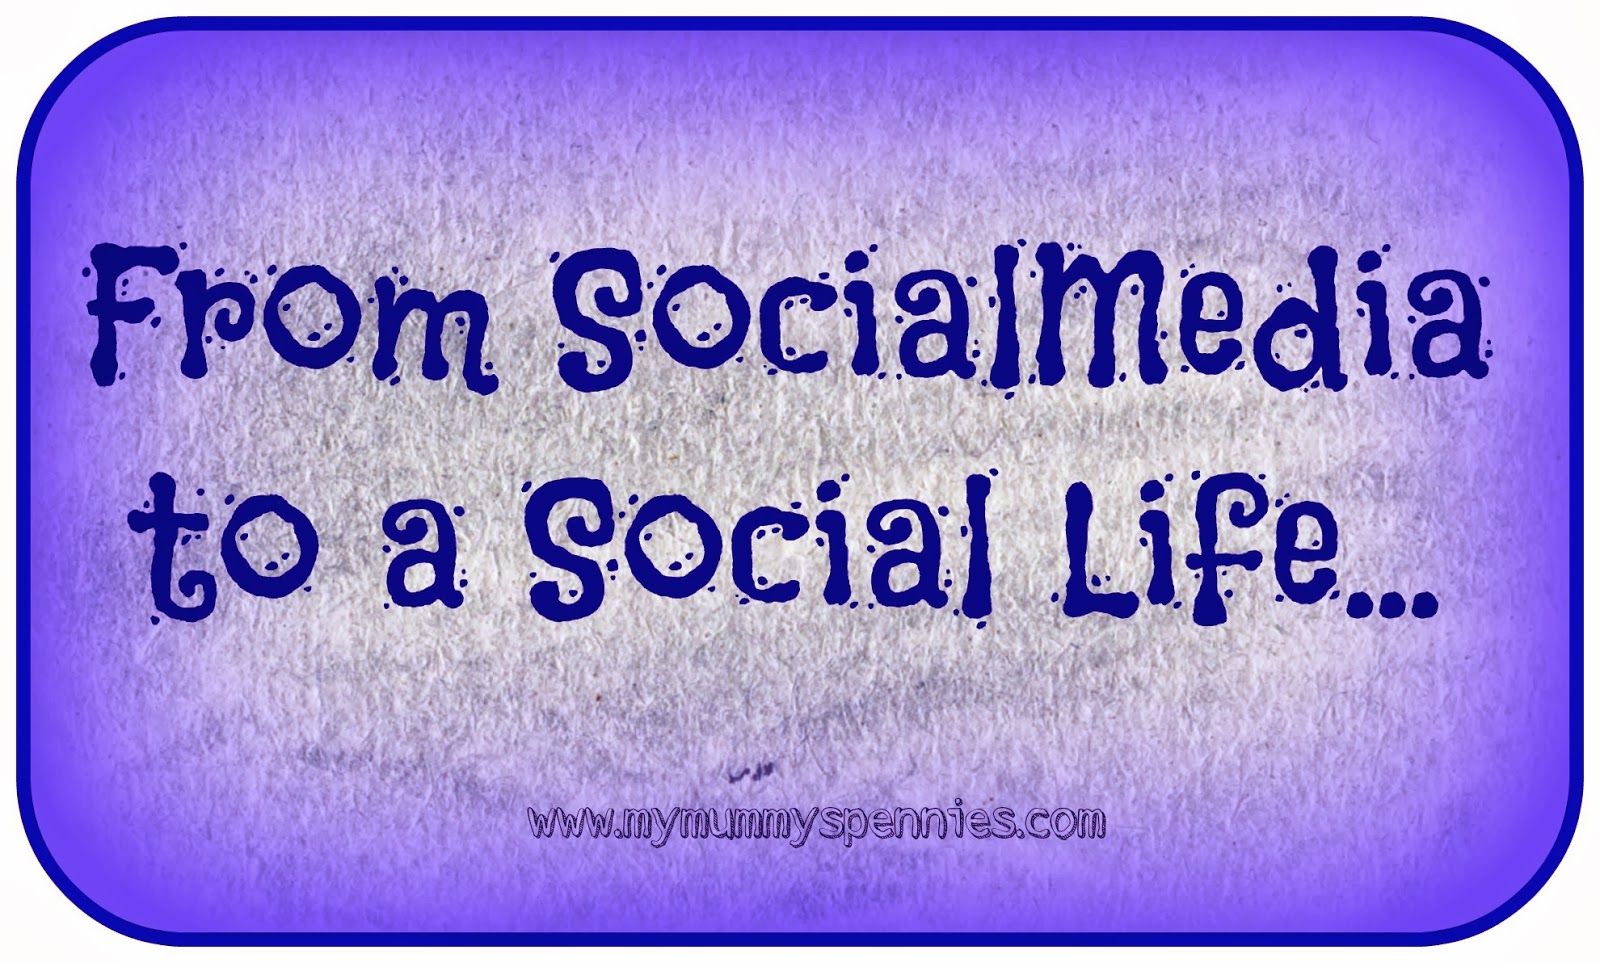 From social media to a social life